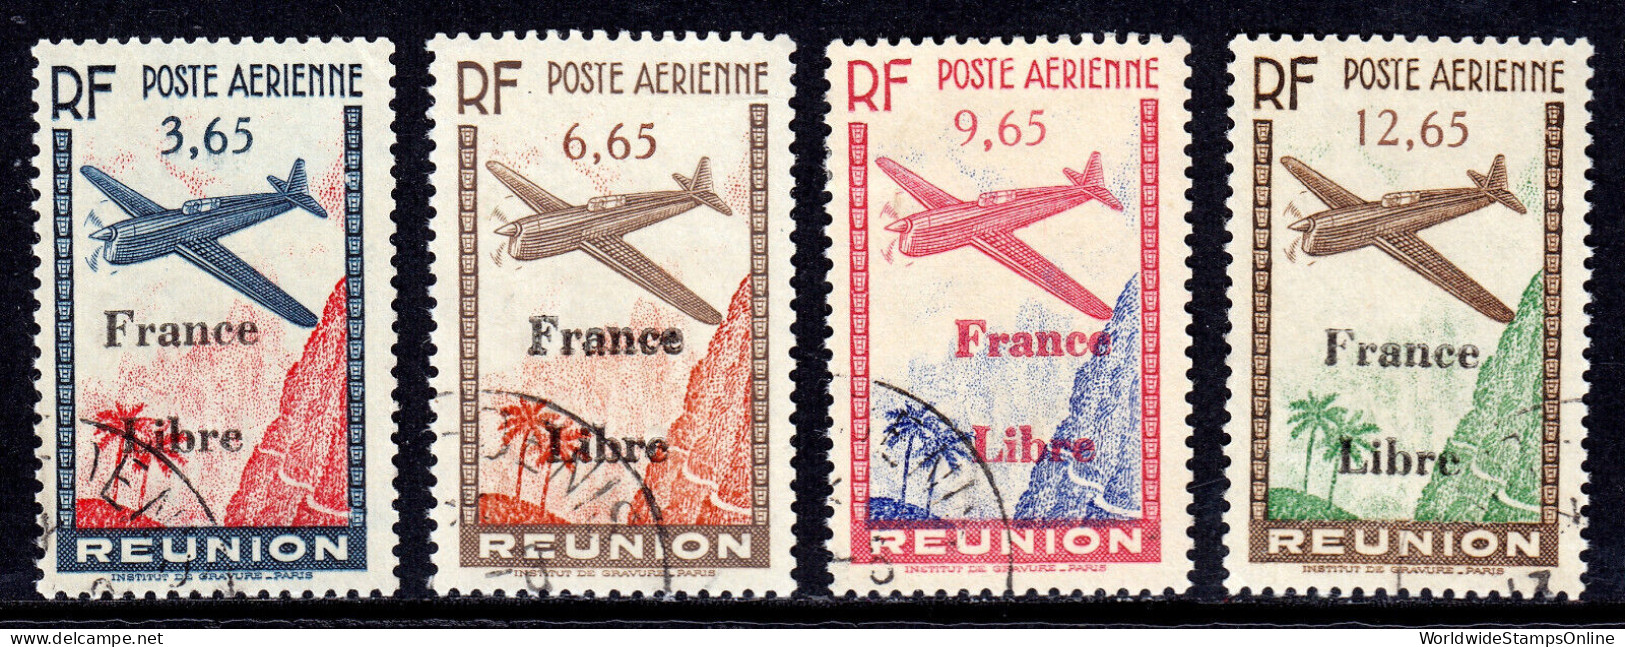 FRANCE (REUNION) — SCOTT C14-C17 — 1943 FRANCE LIBRE AIRMAIL SET— USED — SCV $22 - Airmail